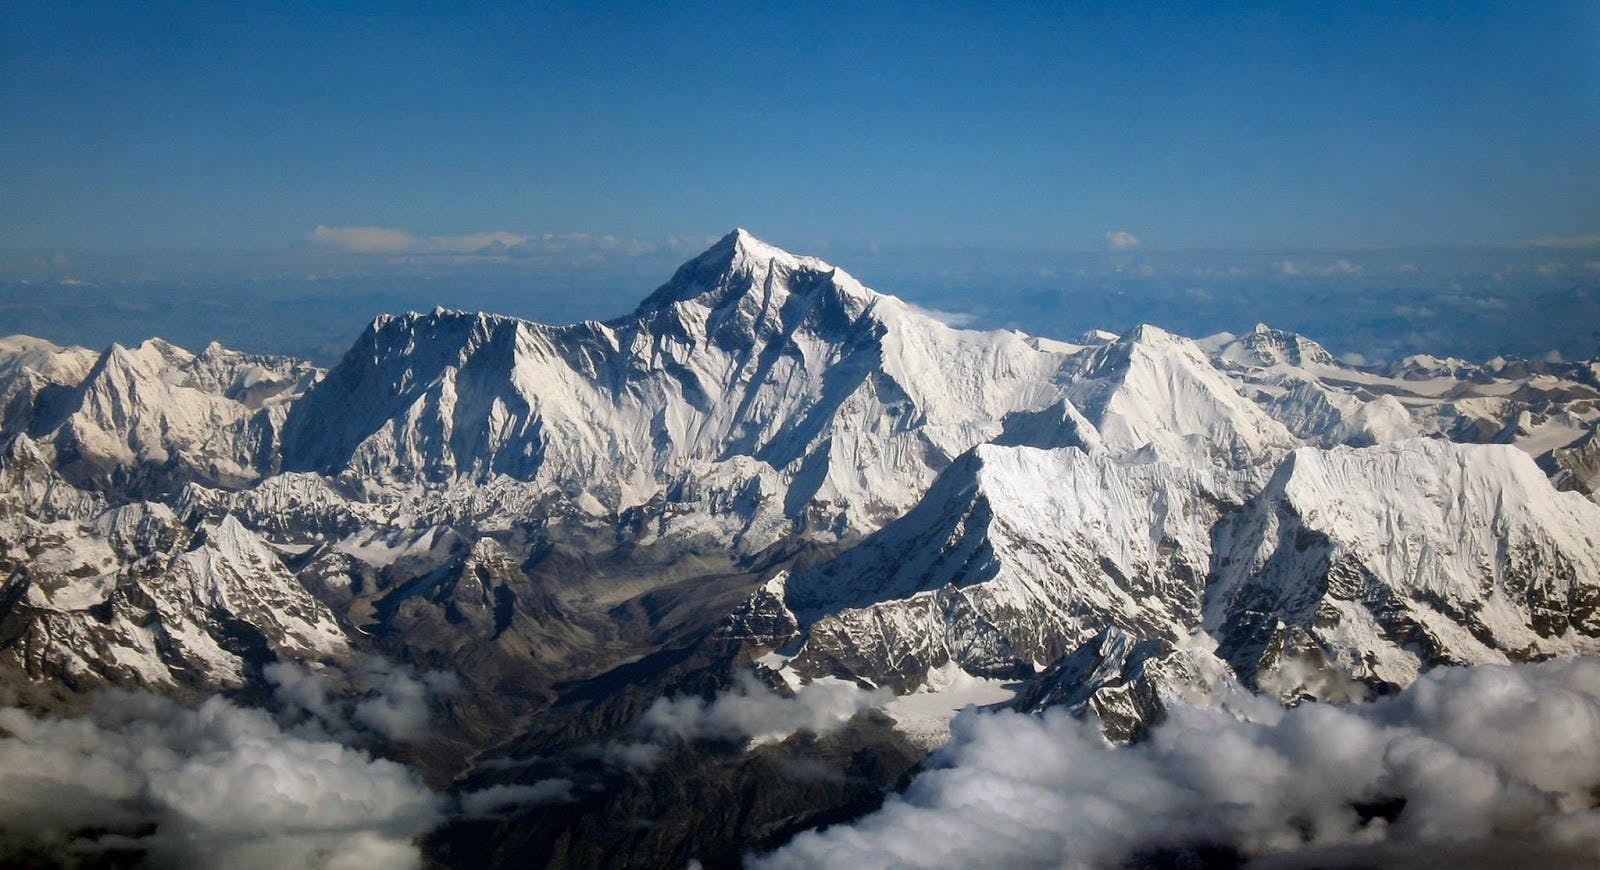 Image - Mount Everest